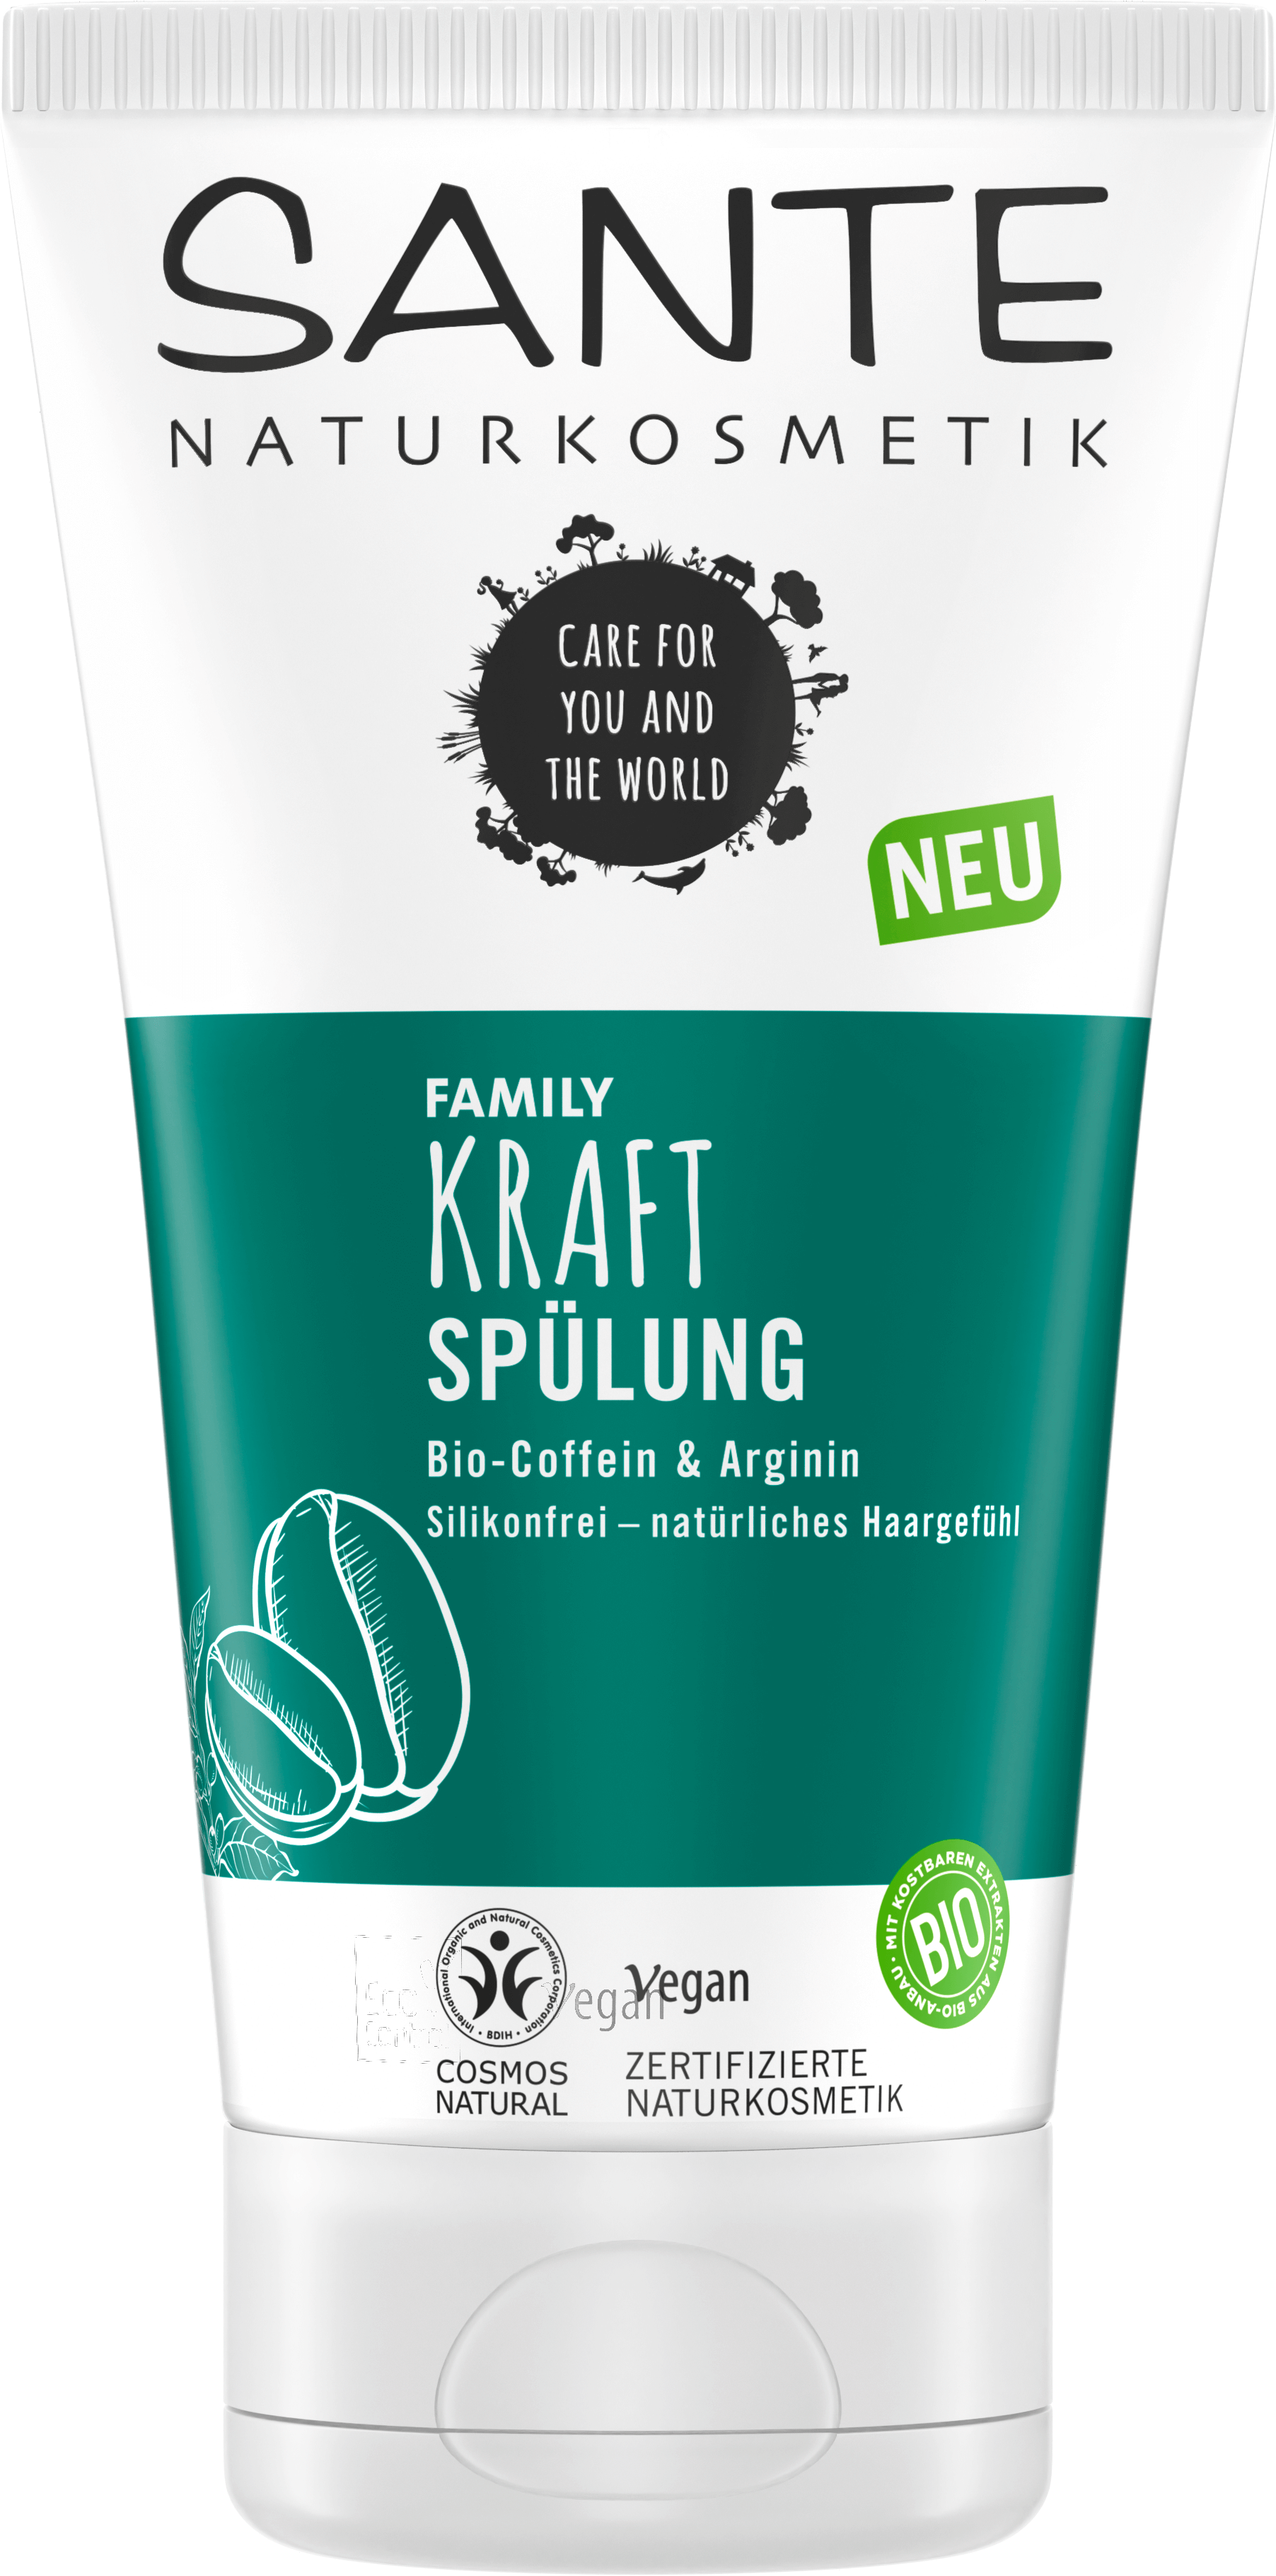 Kraft Spülung Bio-Coffein & Arginin SANTE Naturkosmetik 